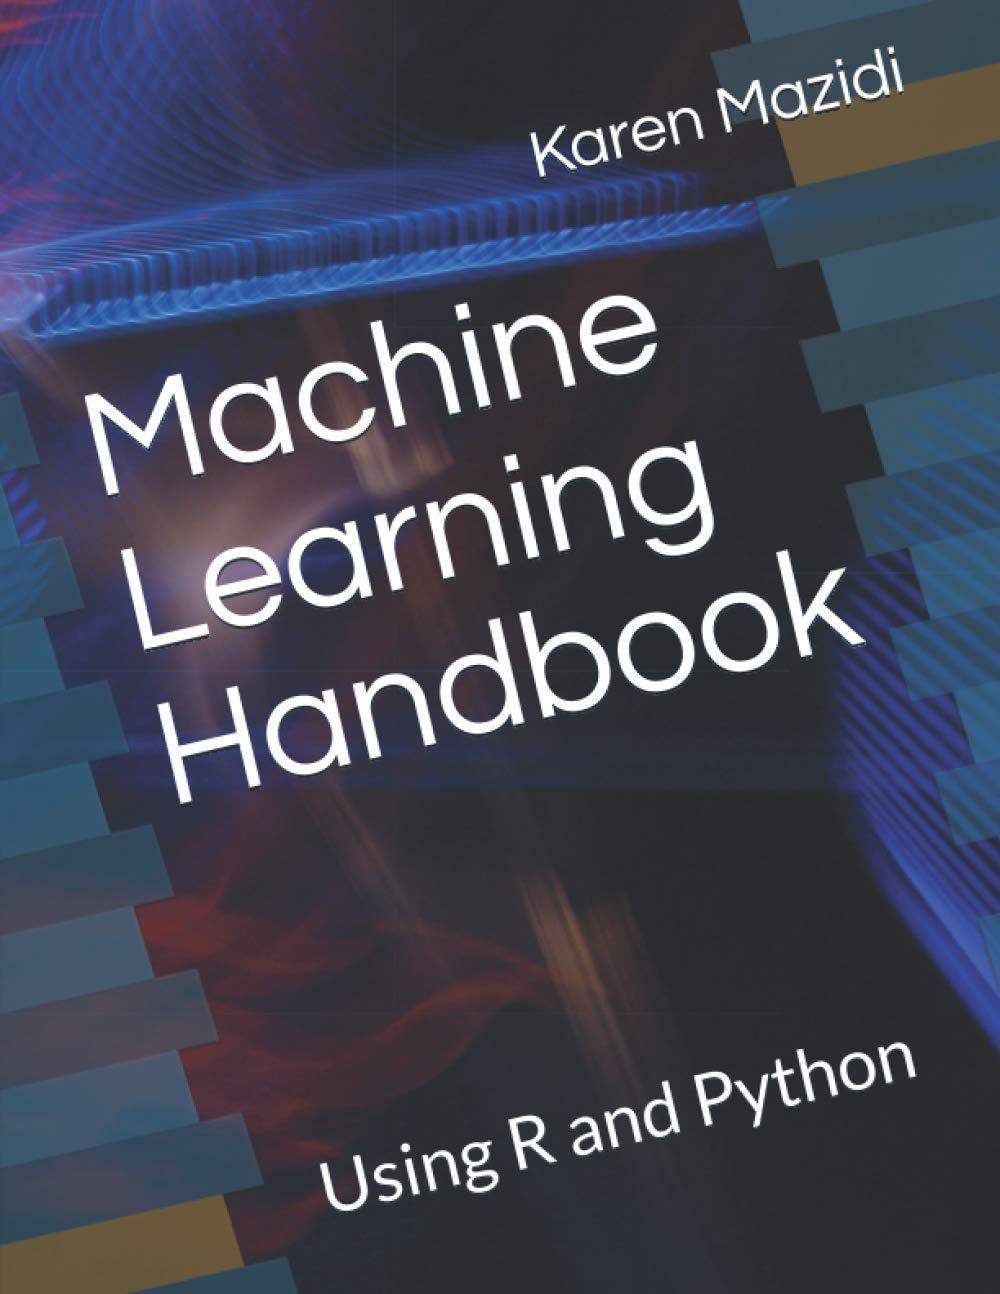 machine learning handbook  using r and python 1st edition dr. karen mazidi b08pjpqdsx, 979-8576018475